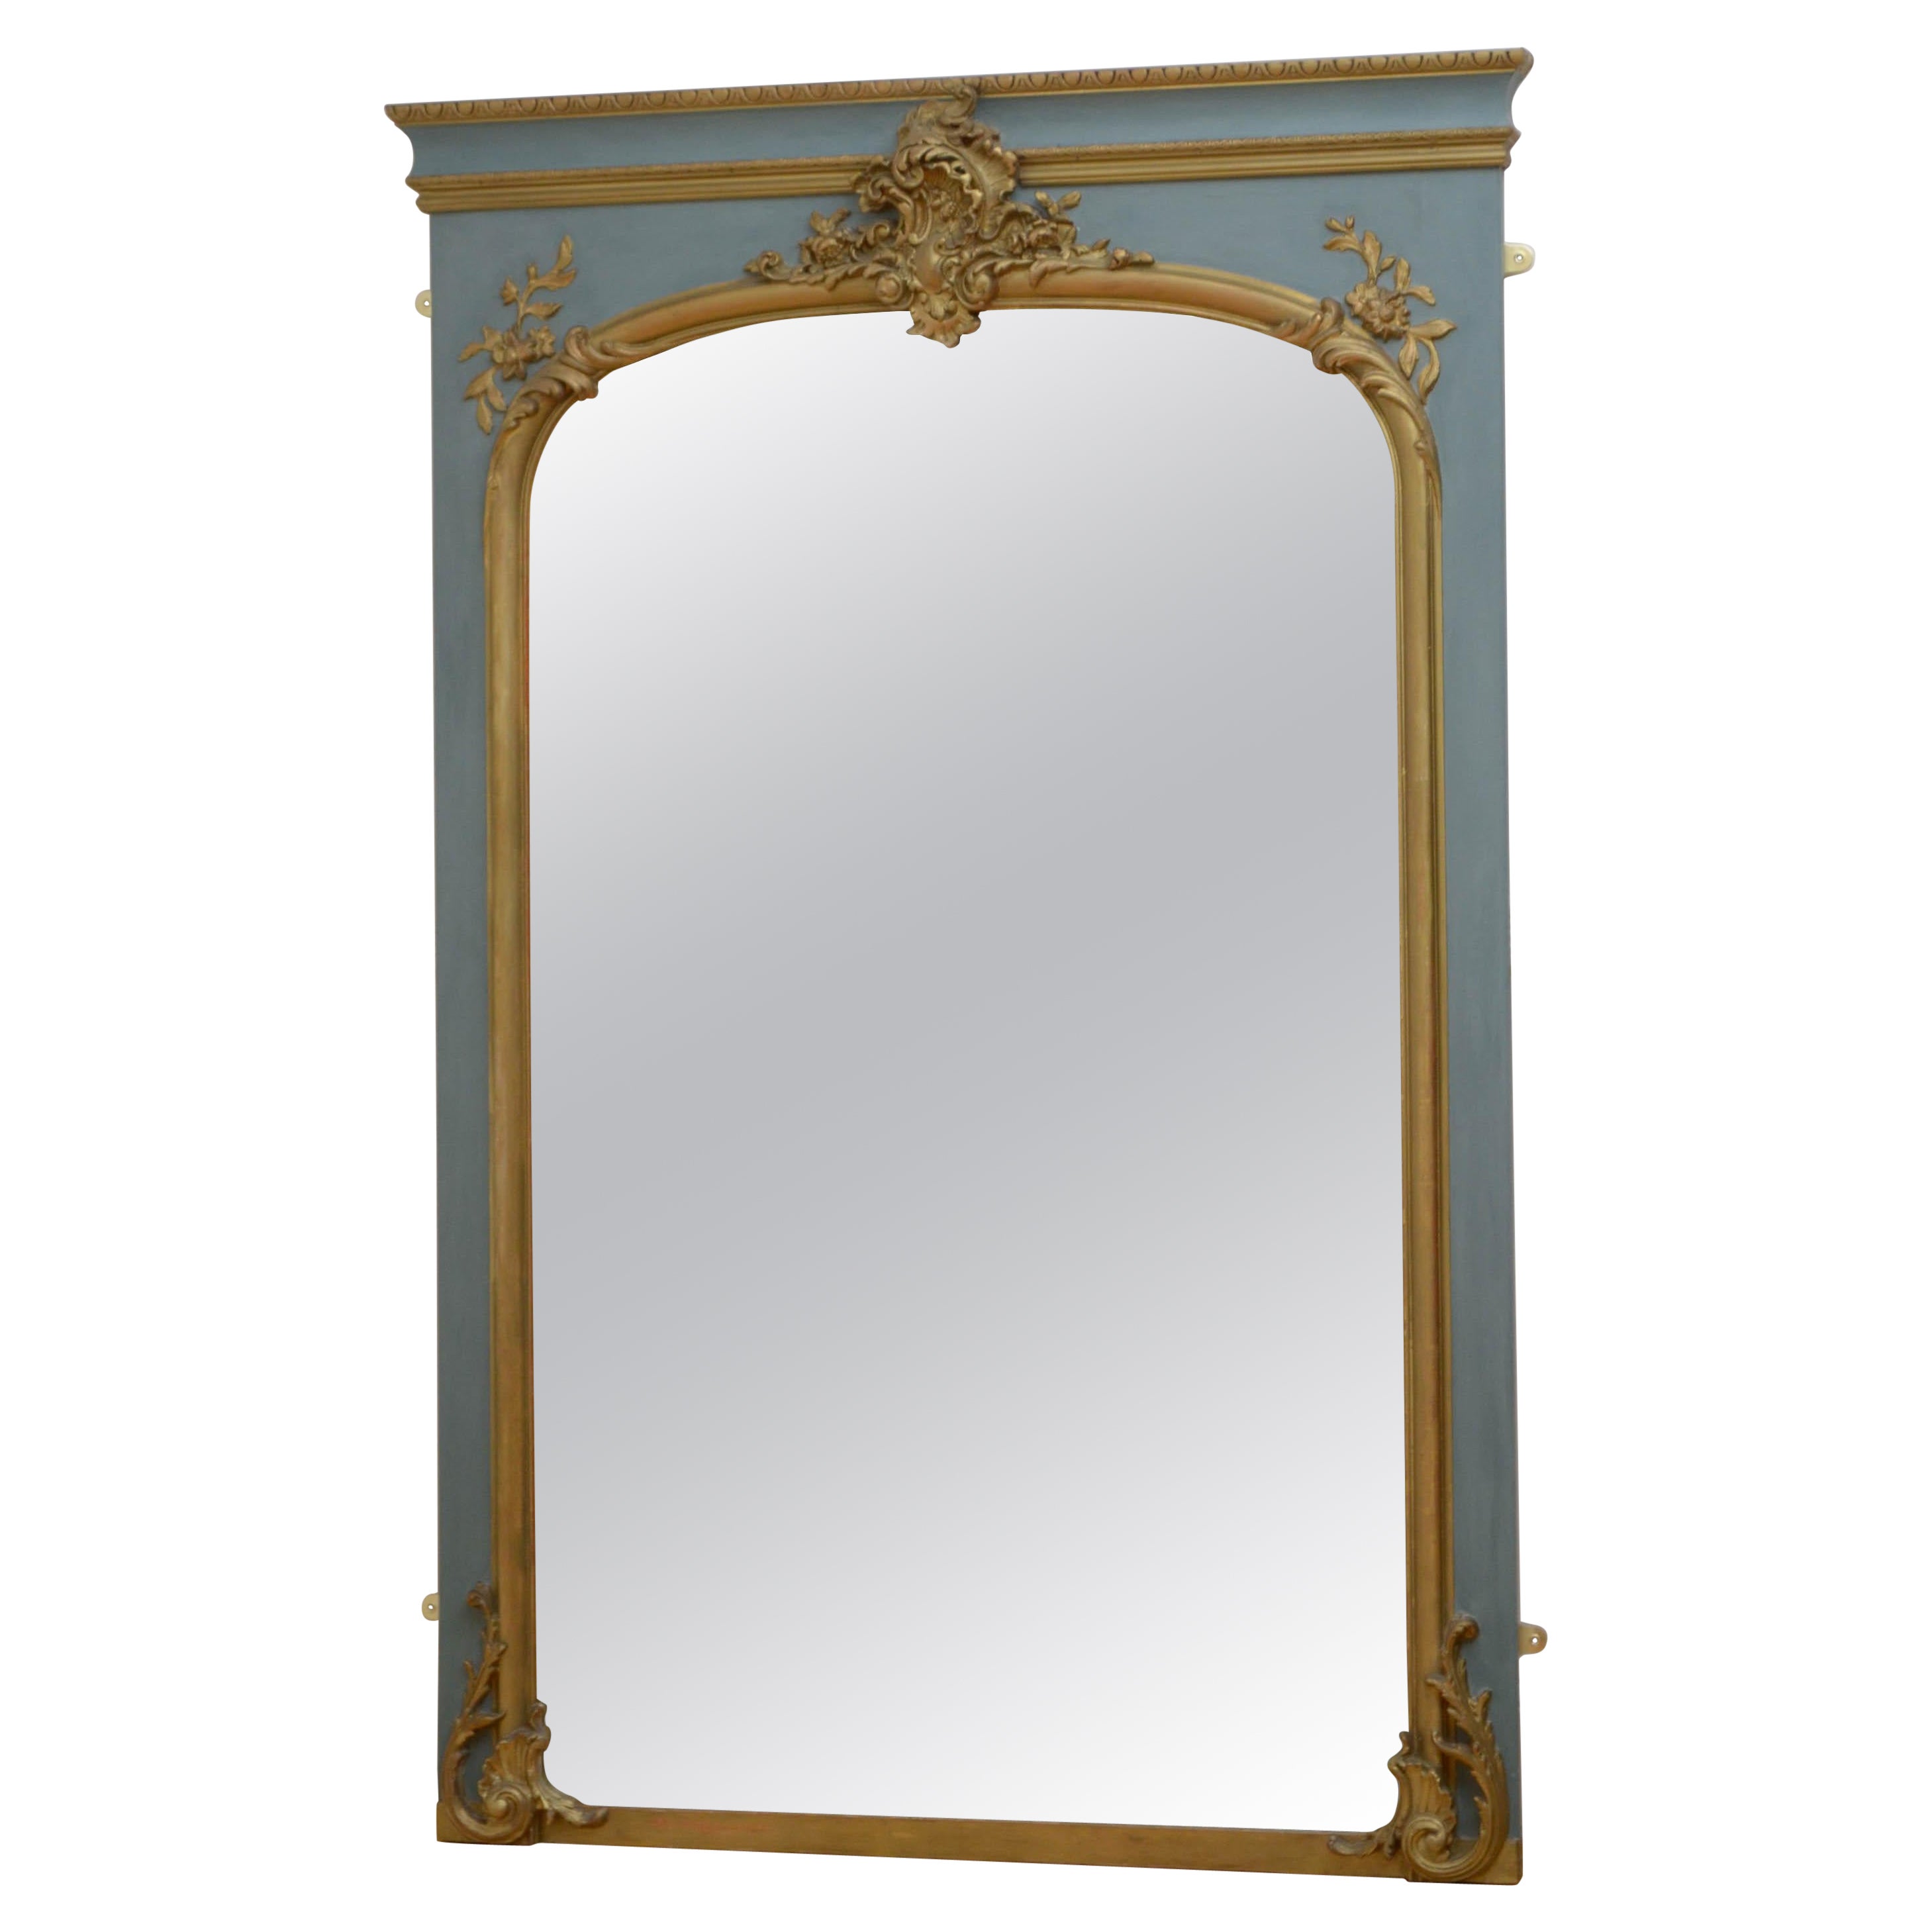 19th Century Trumeau Mirror